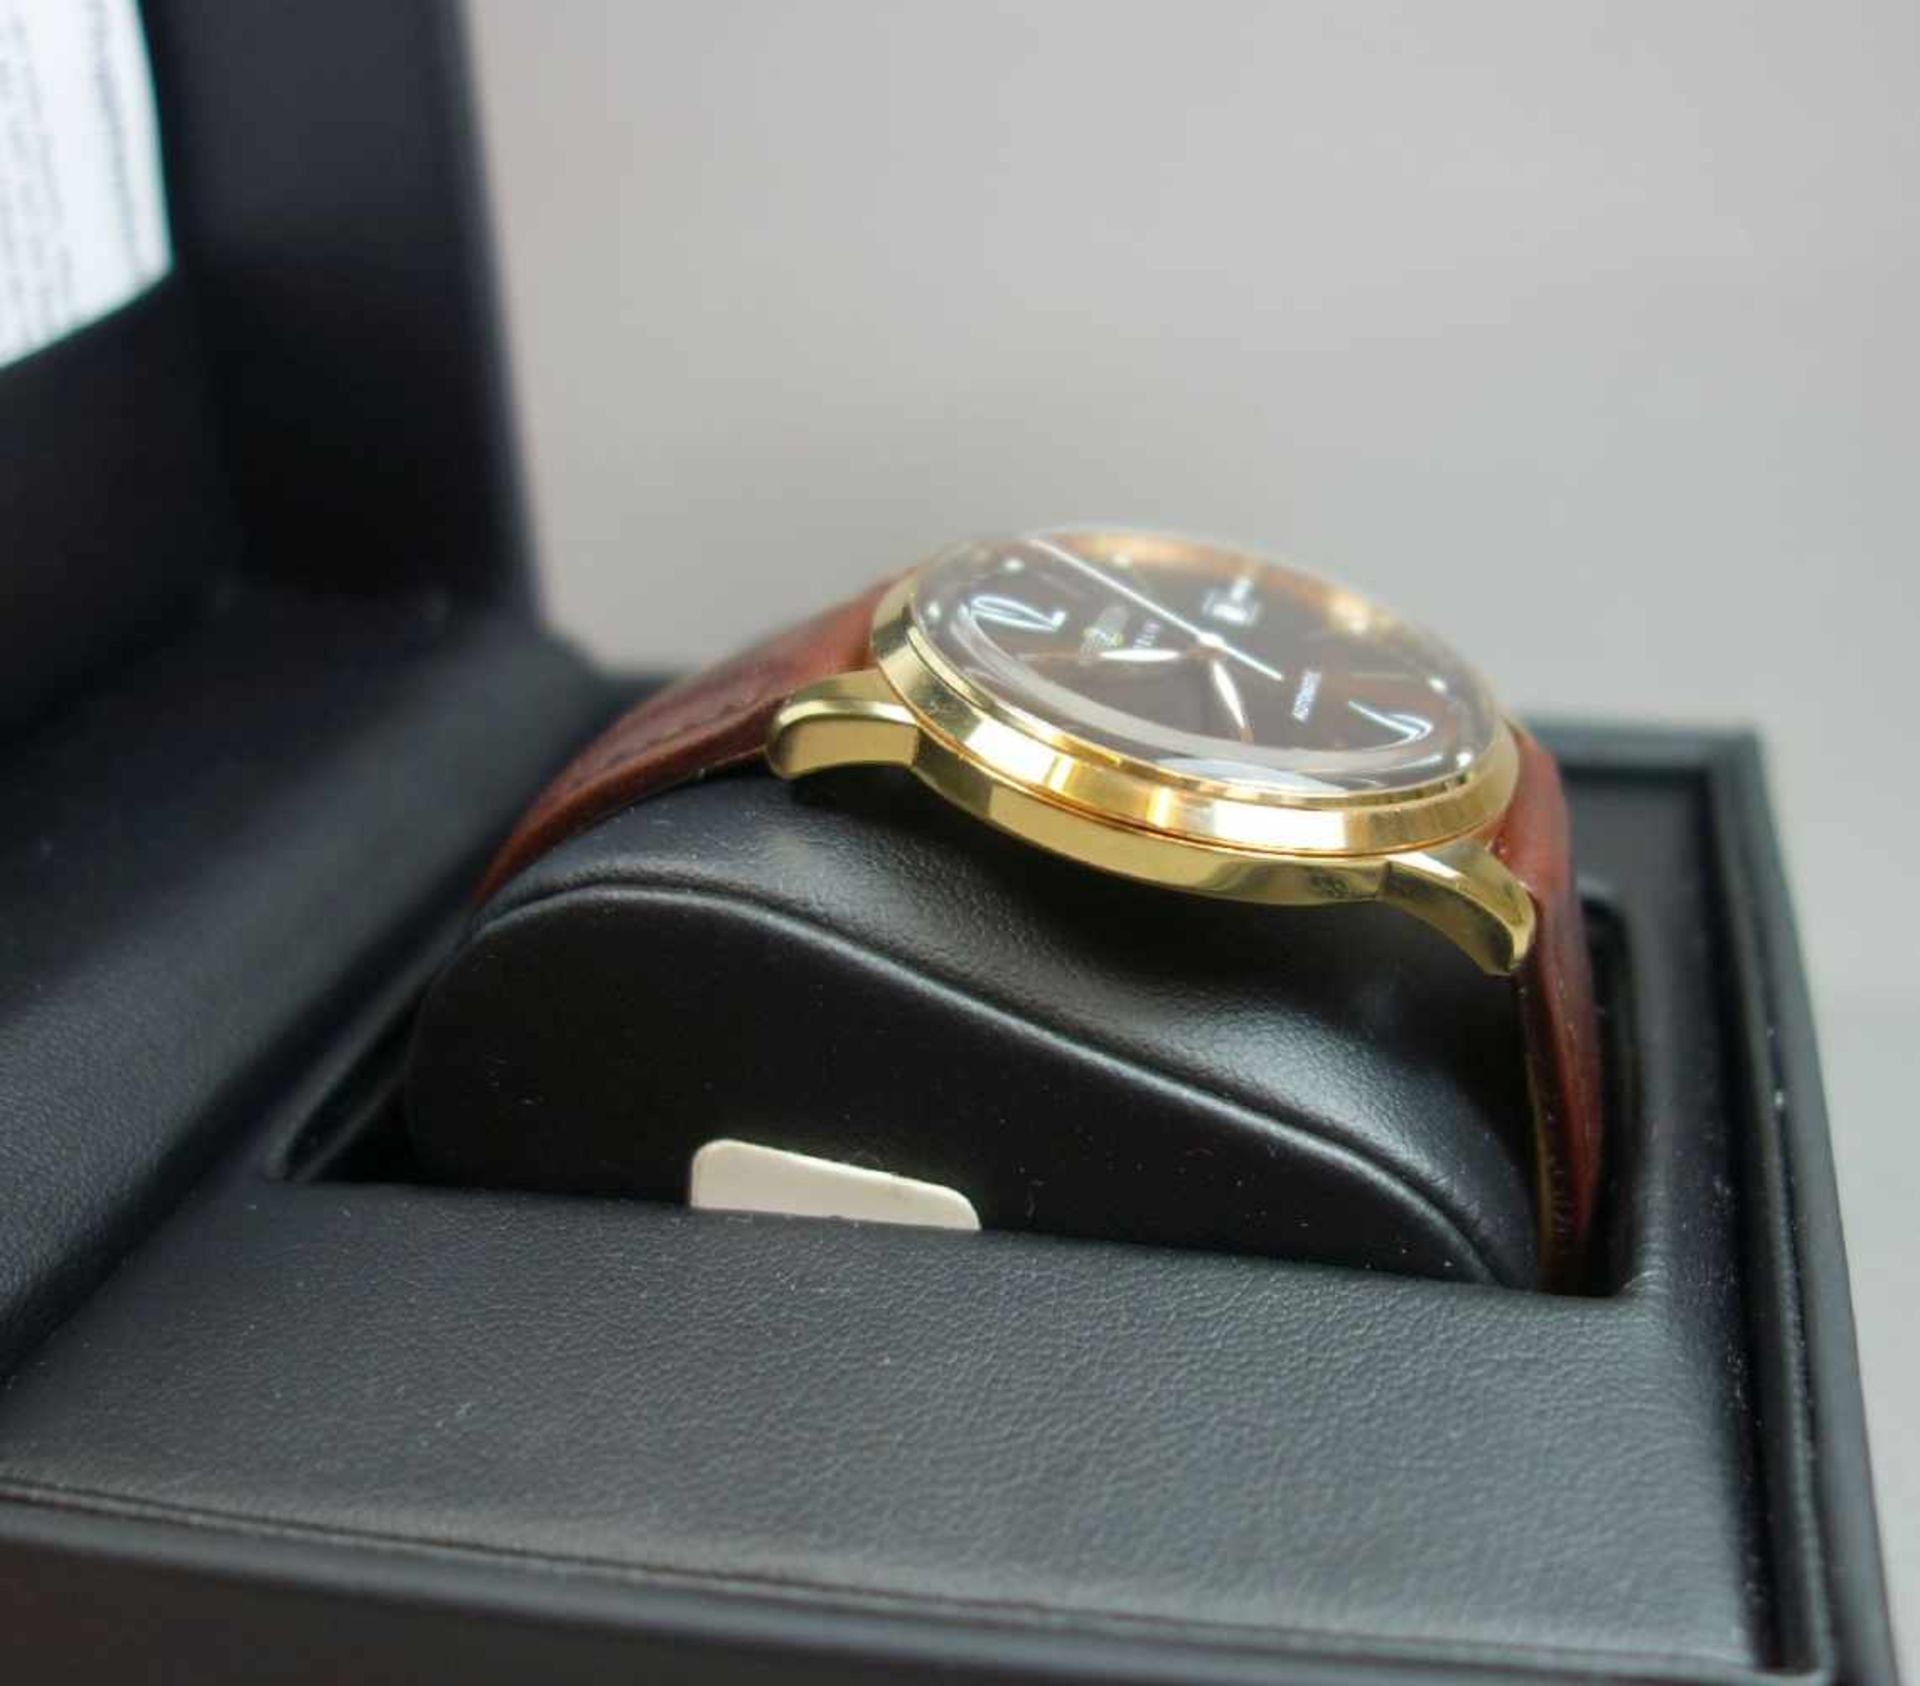 ZEPPELIN ARMBANDUHR / wristwatch, Automatik-Uhr, Manufaktur Point tec Electronic GmbH / Deutschland. - Image 4 of 7